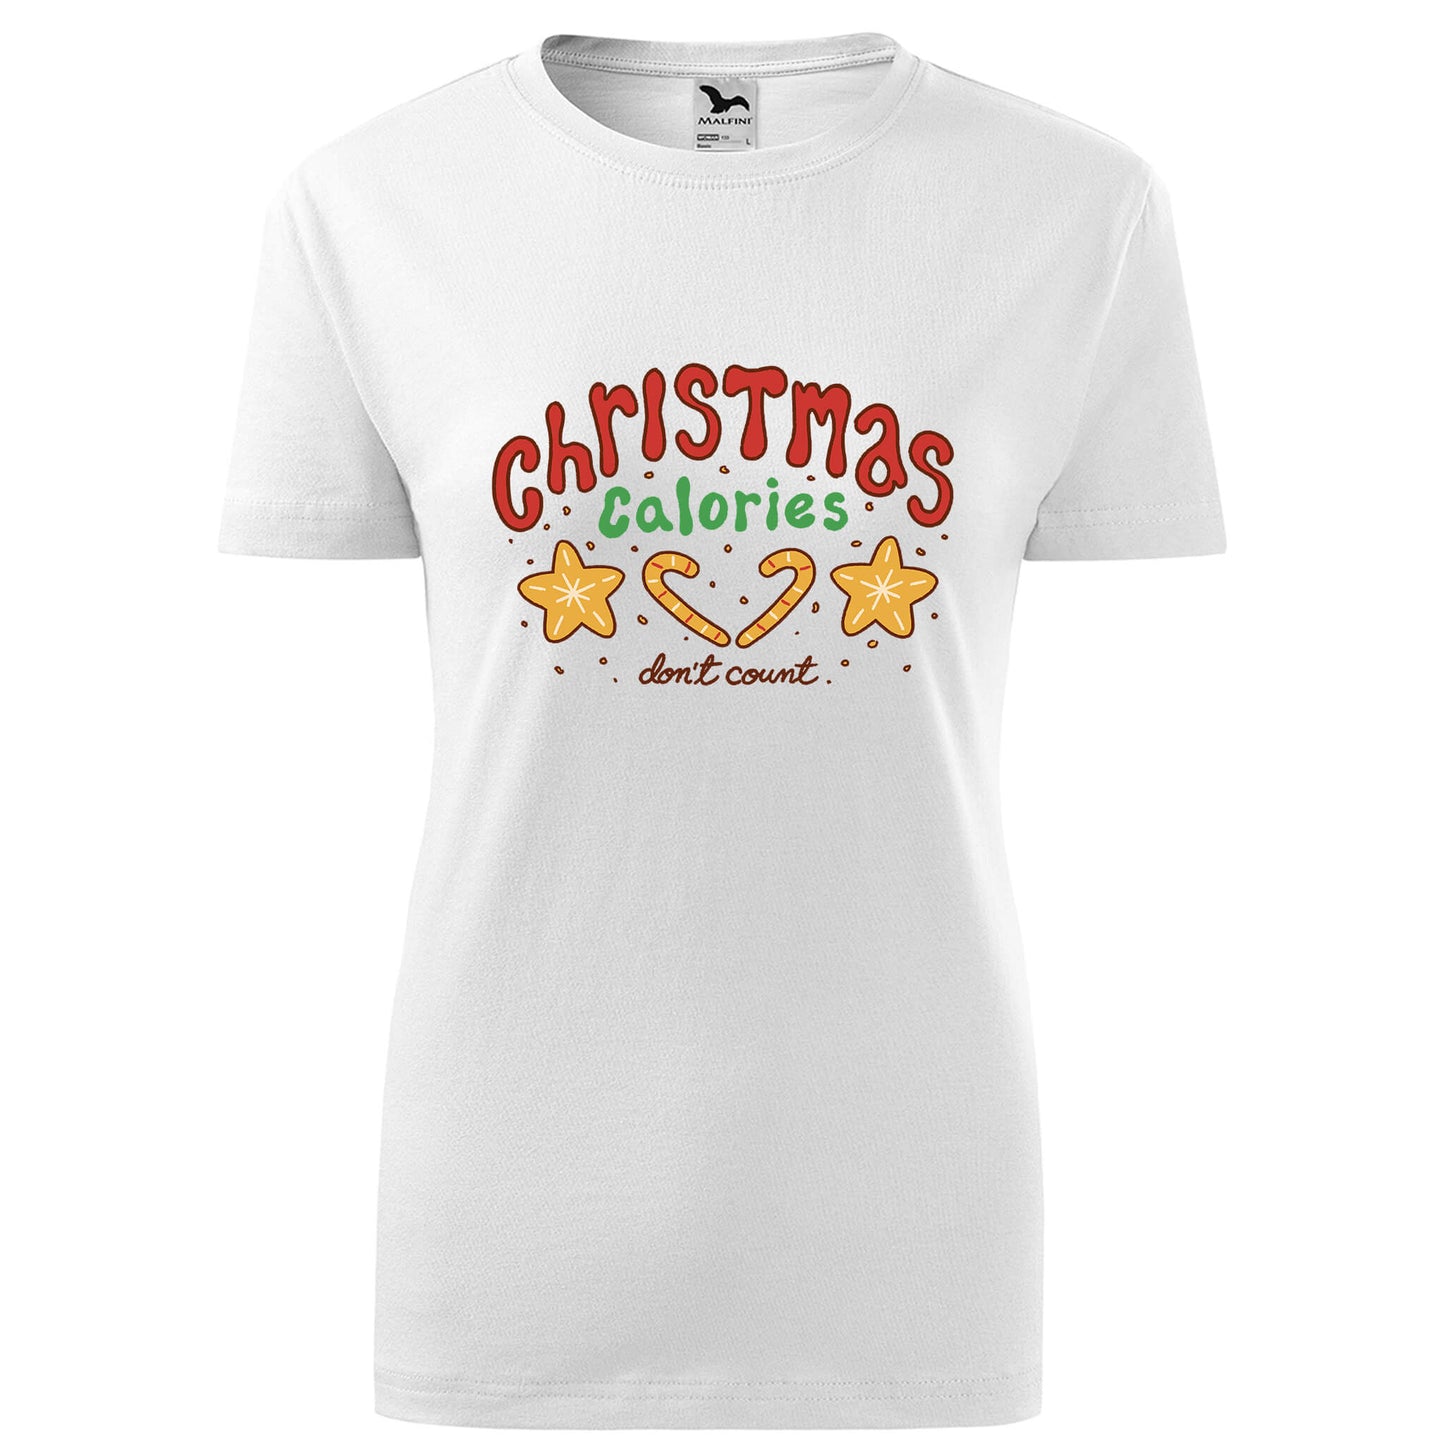 Christmas calories t-shirt - rvdesignprint